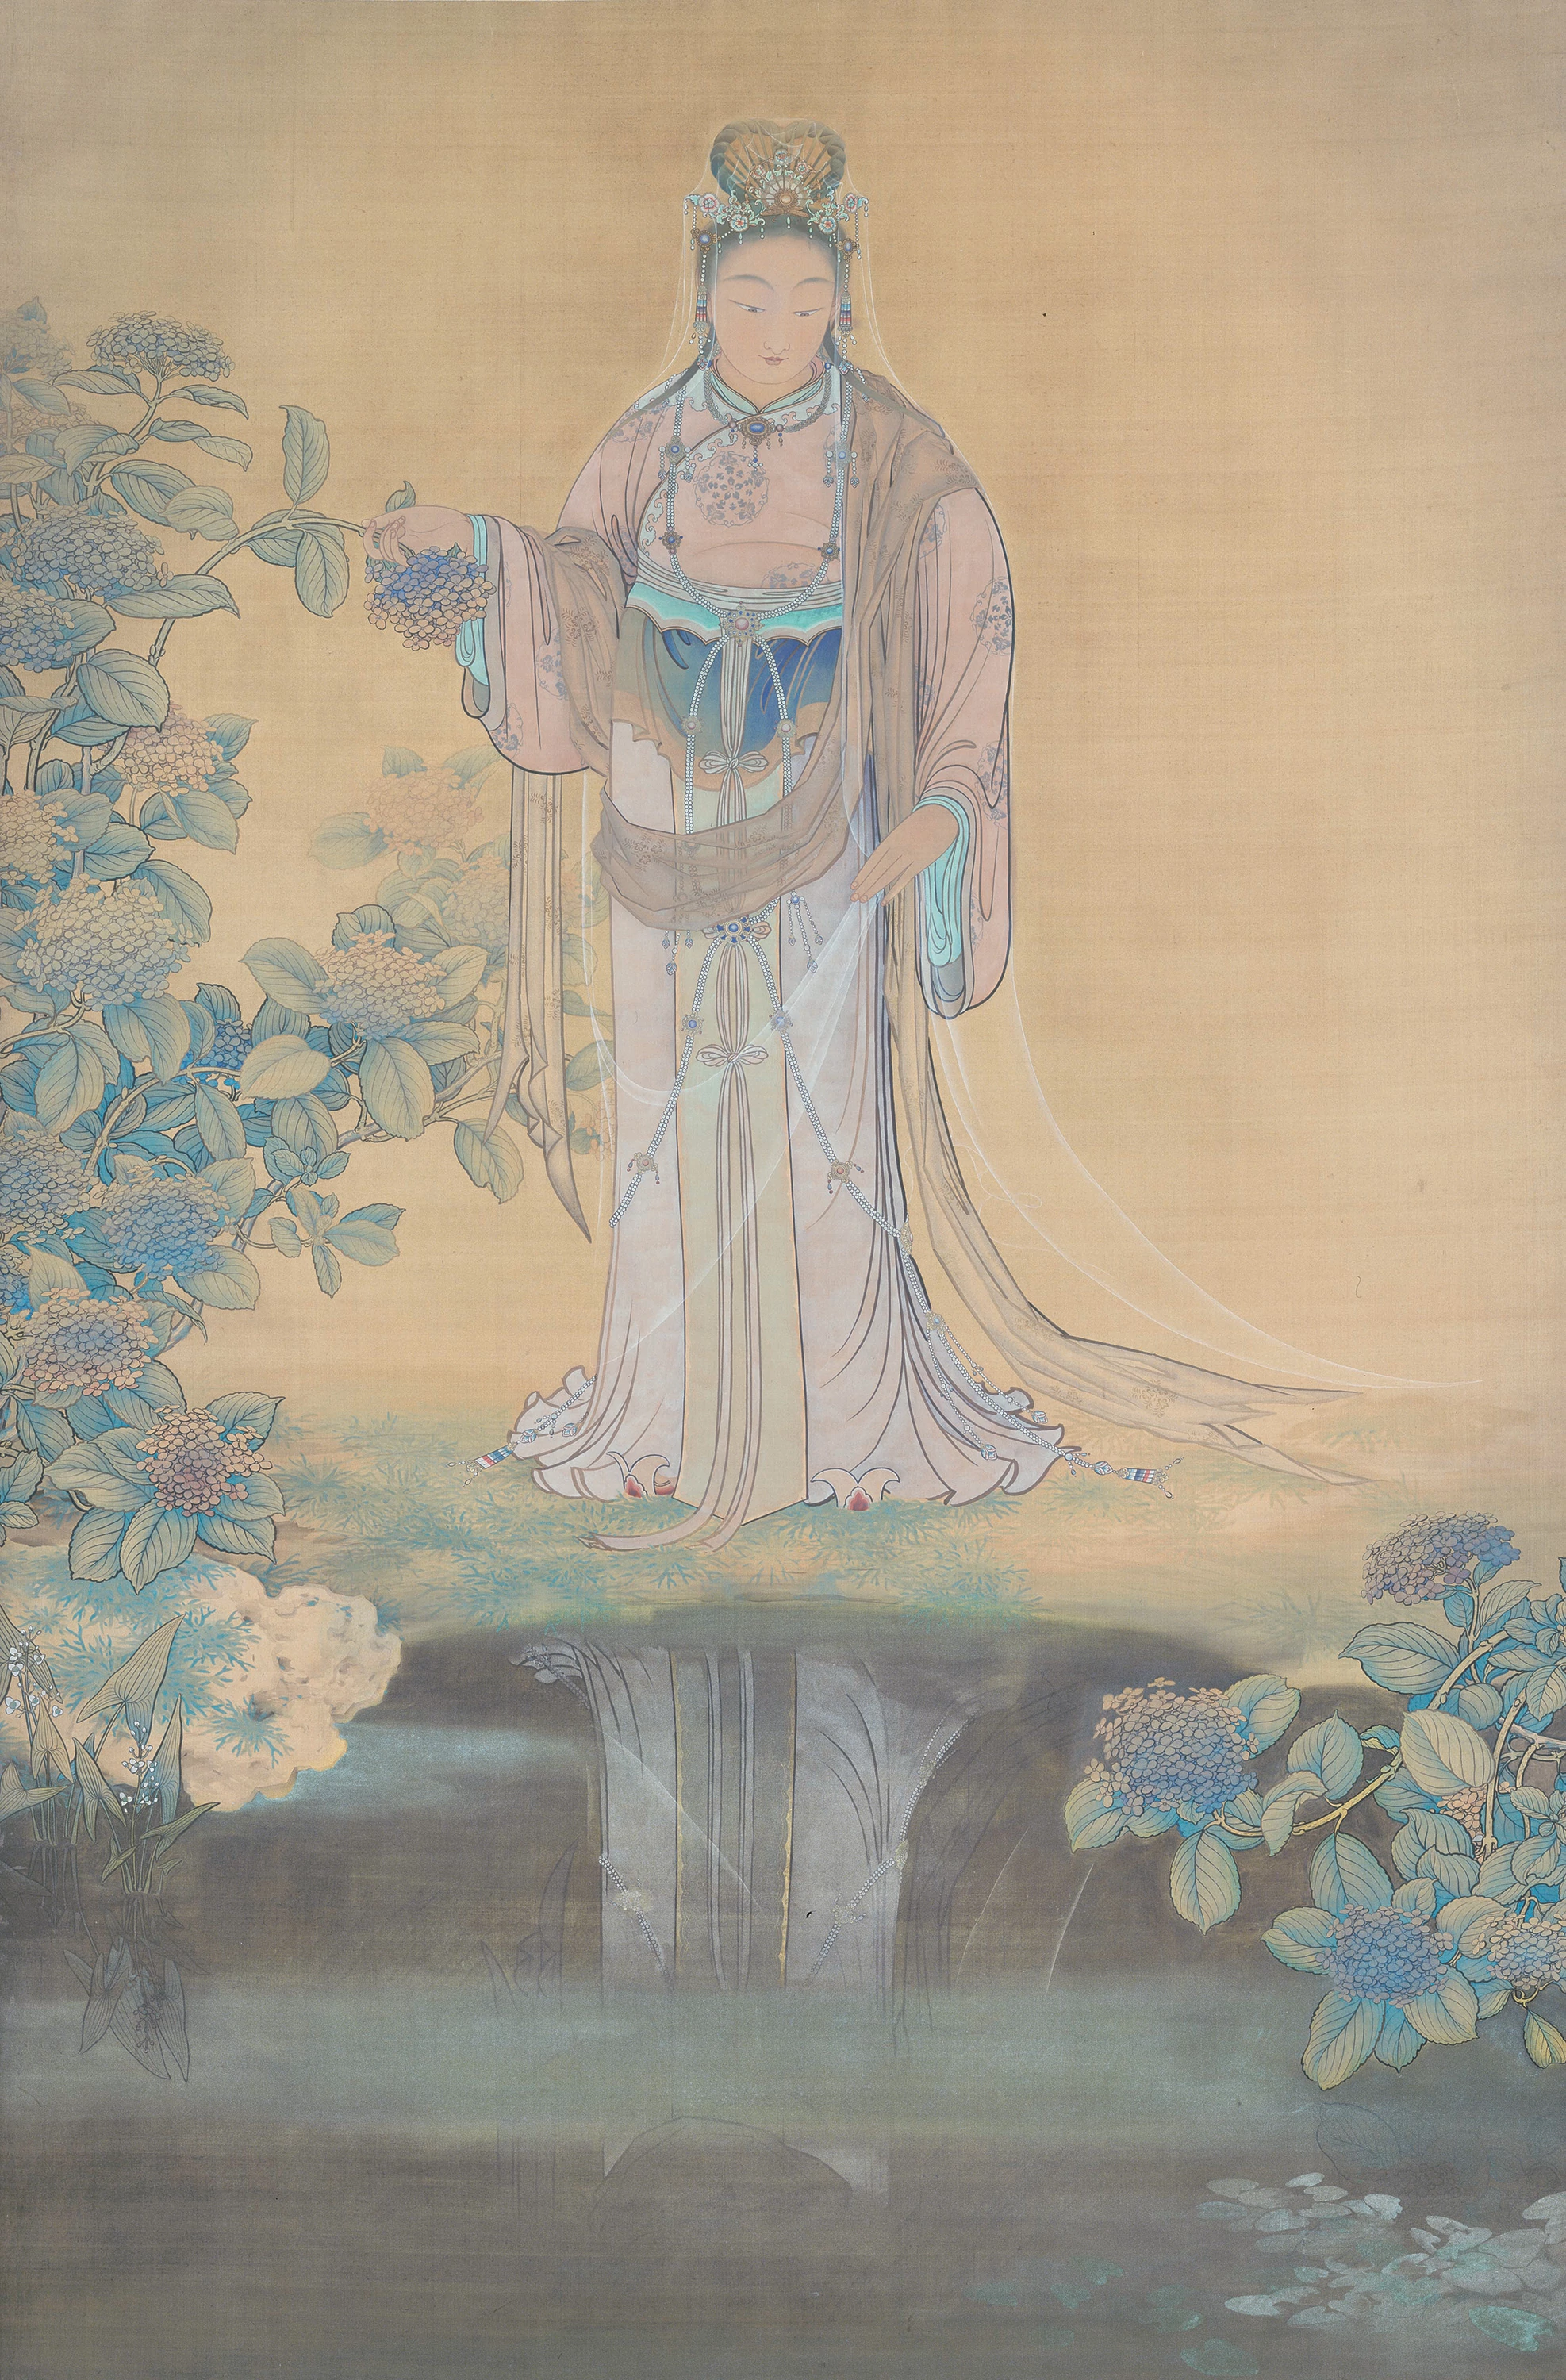 Reflection in the Water, Hishida Shunsō